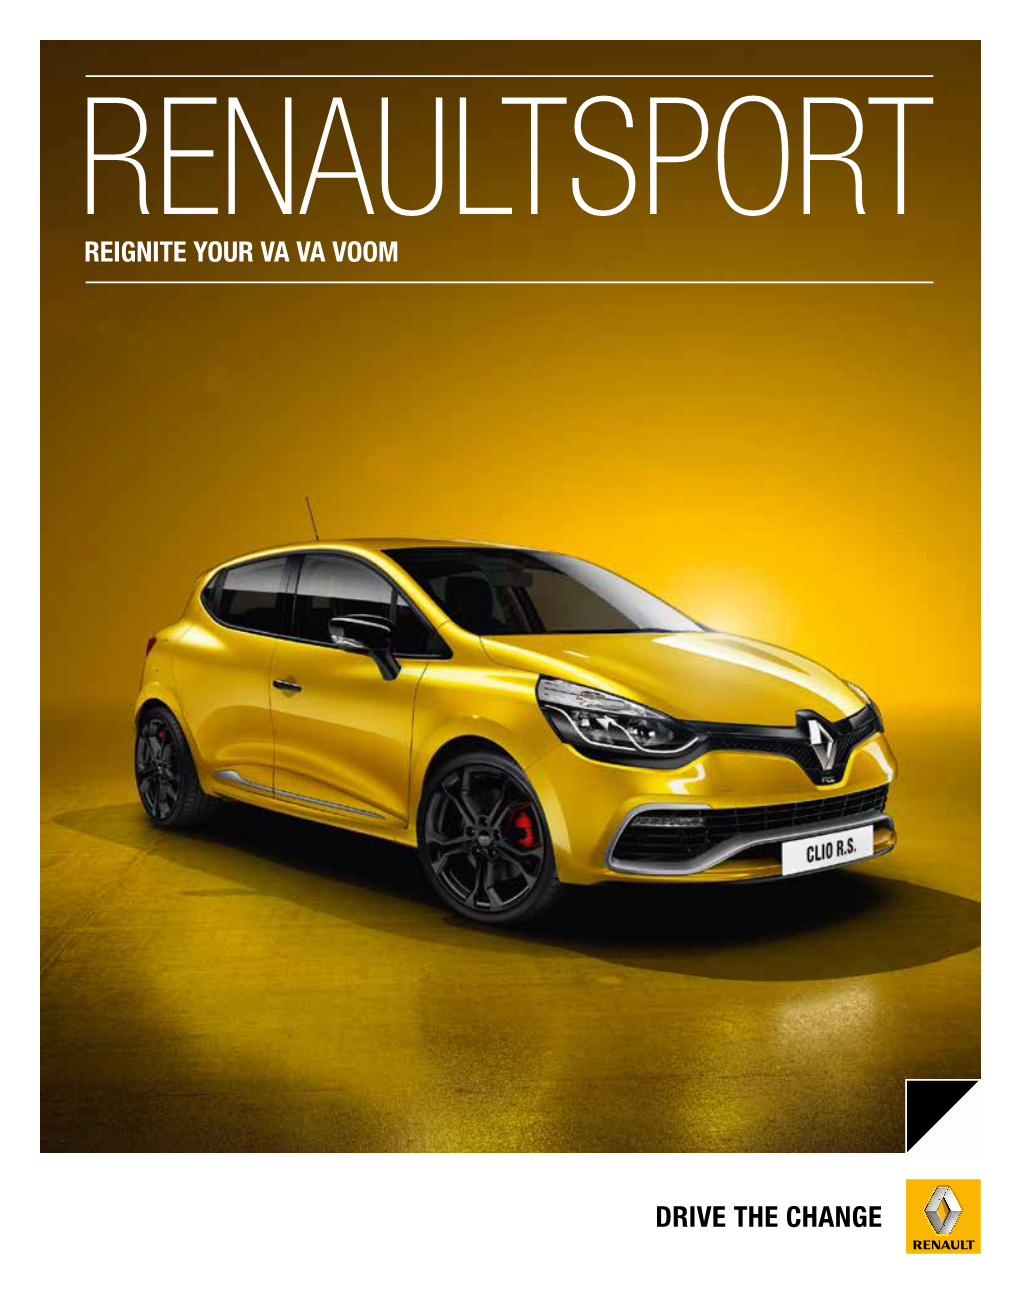 Renaultsport Reignite Your Va Va Voom